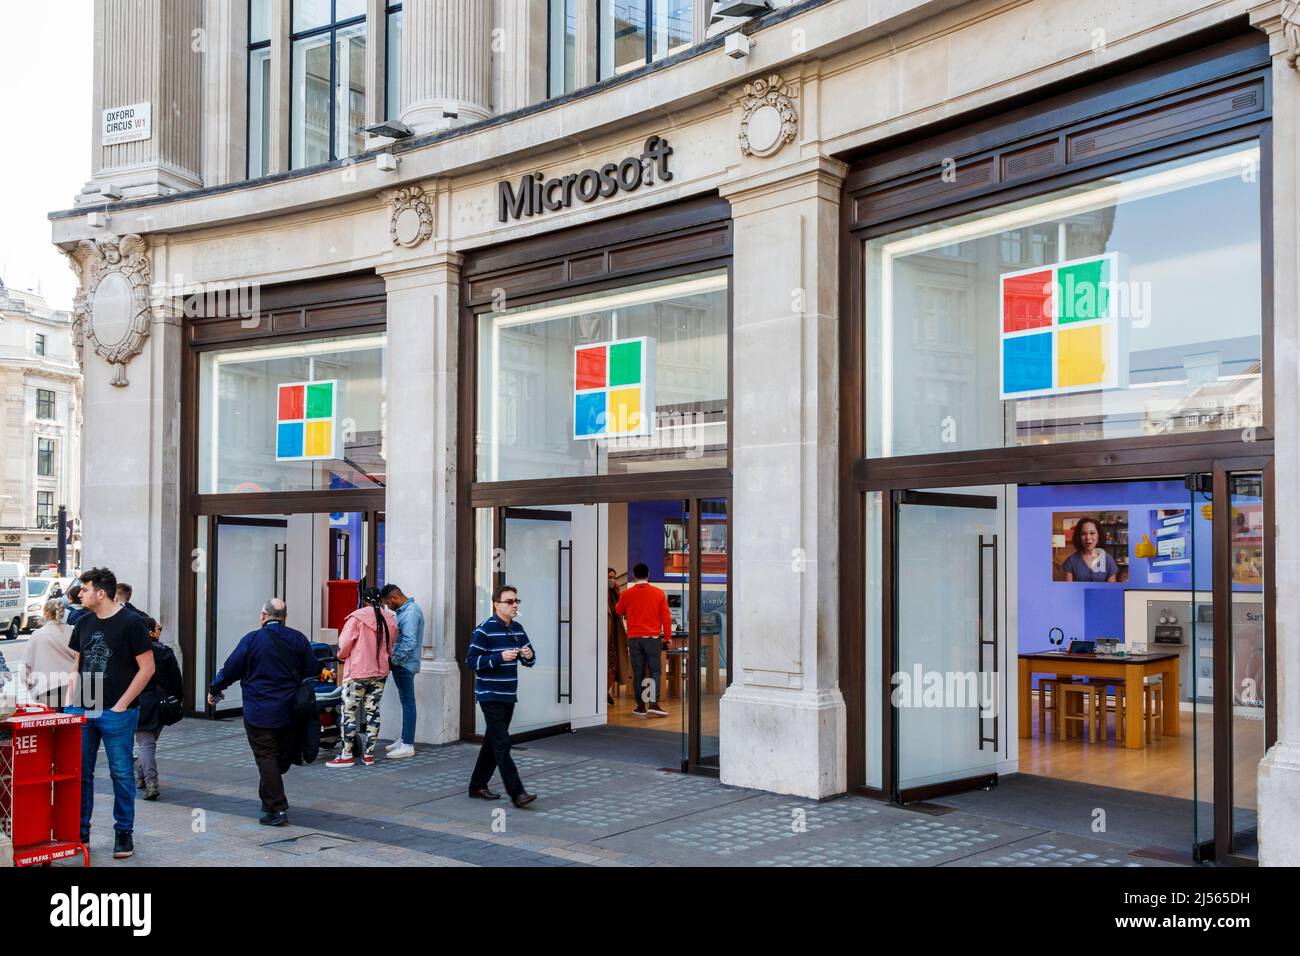 The Microsoft store at Oxford Circus, London, UK Stock Photo